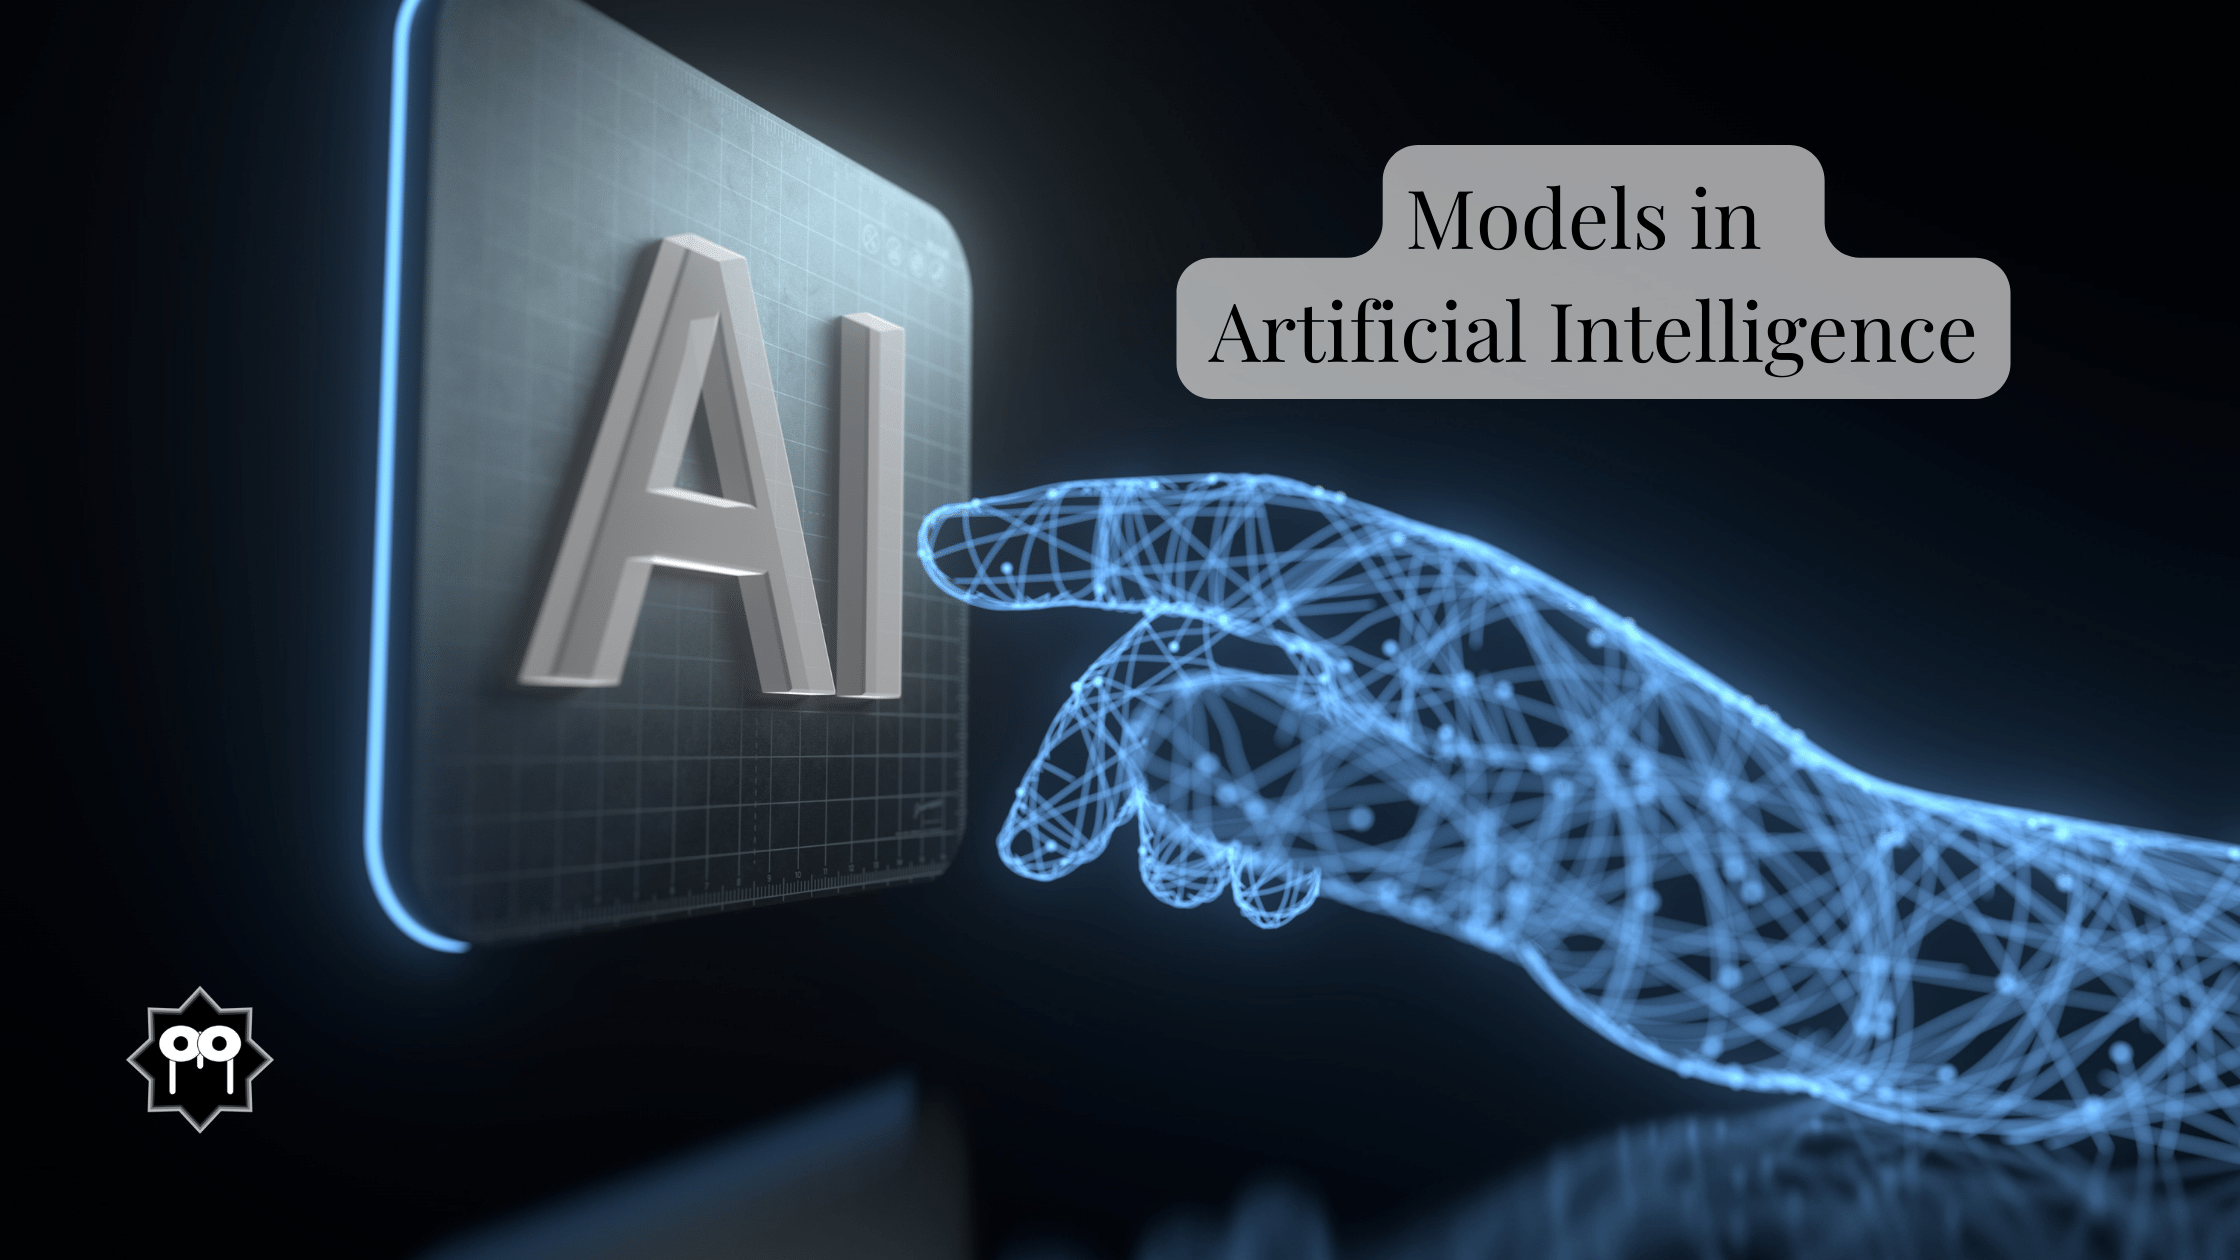 Models in Artificial Intelligence